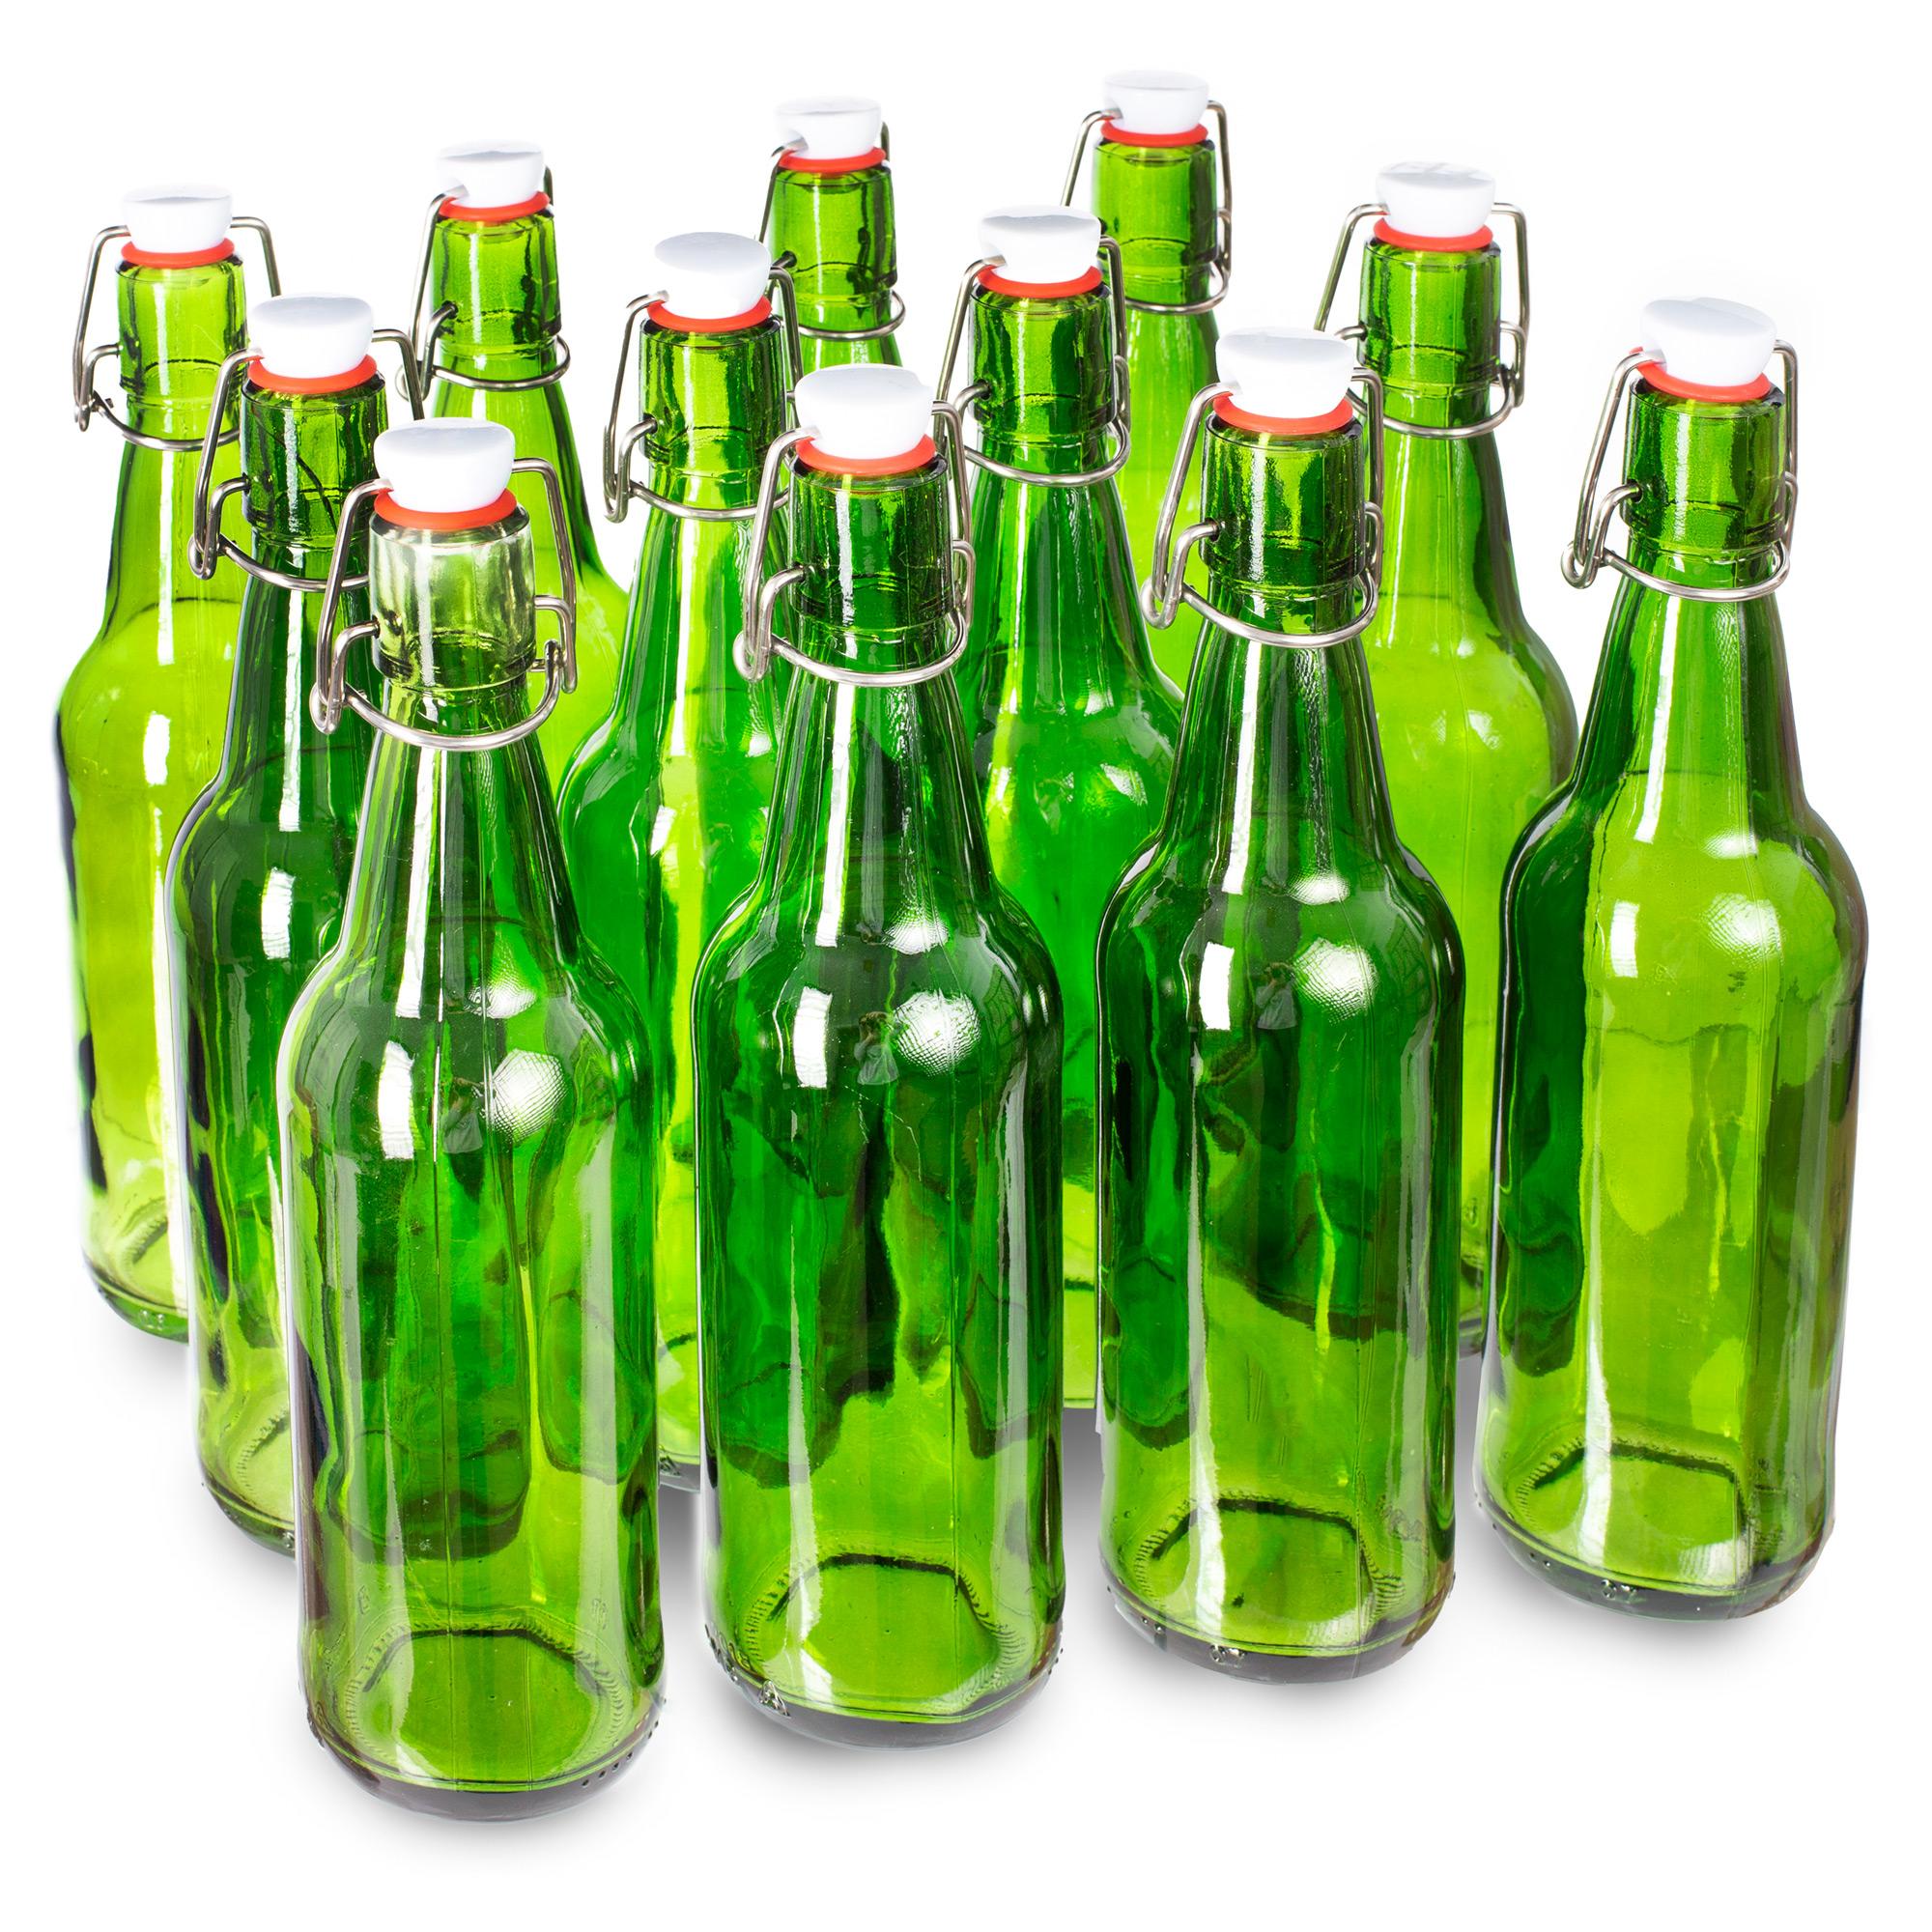 Swing-top Grolsch Bottles for Homebrewing